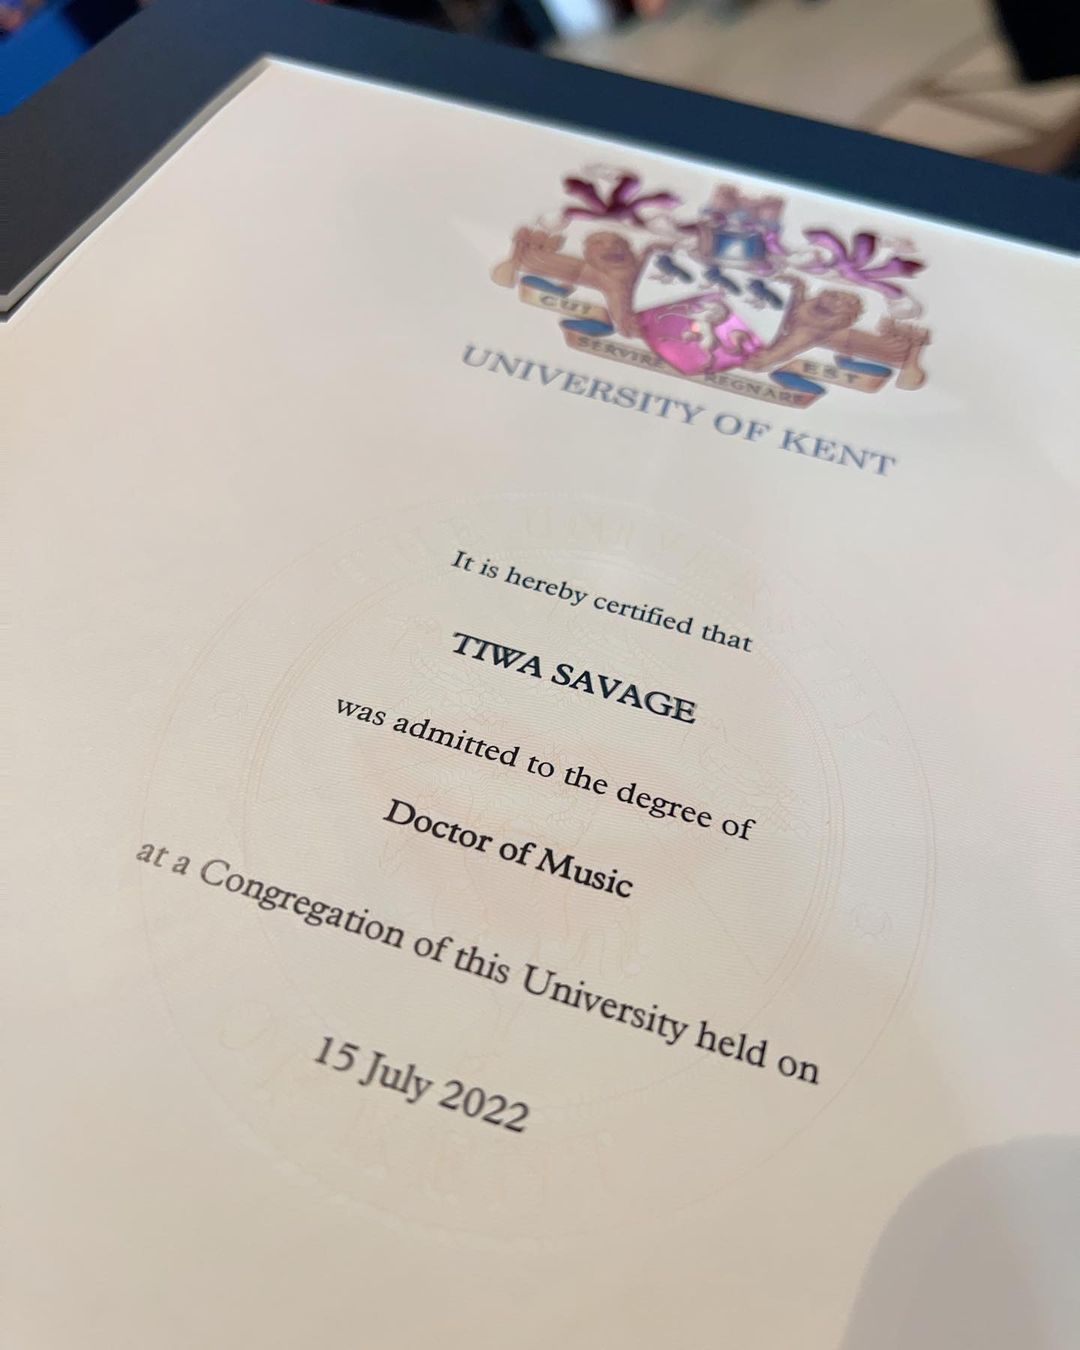 Tiwa - Tiwa Savage Bags Honorary Degree From The University Of Kent, UK (photos) 15762161_tiwasavagepost2022071518213_jpeg19aeb8c29c8b470593c01a813e672878